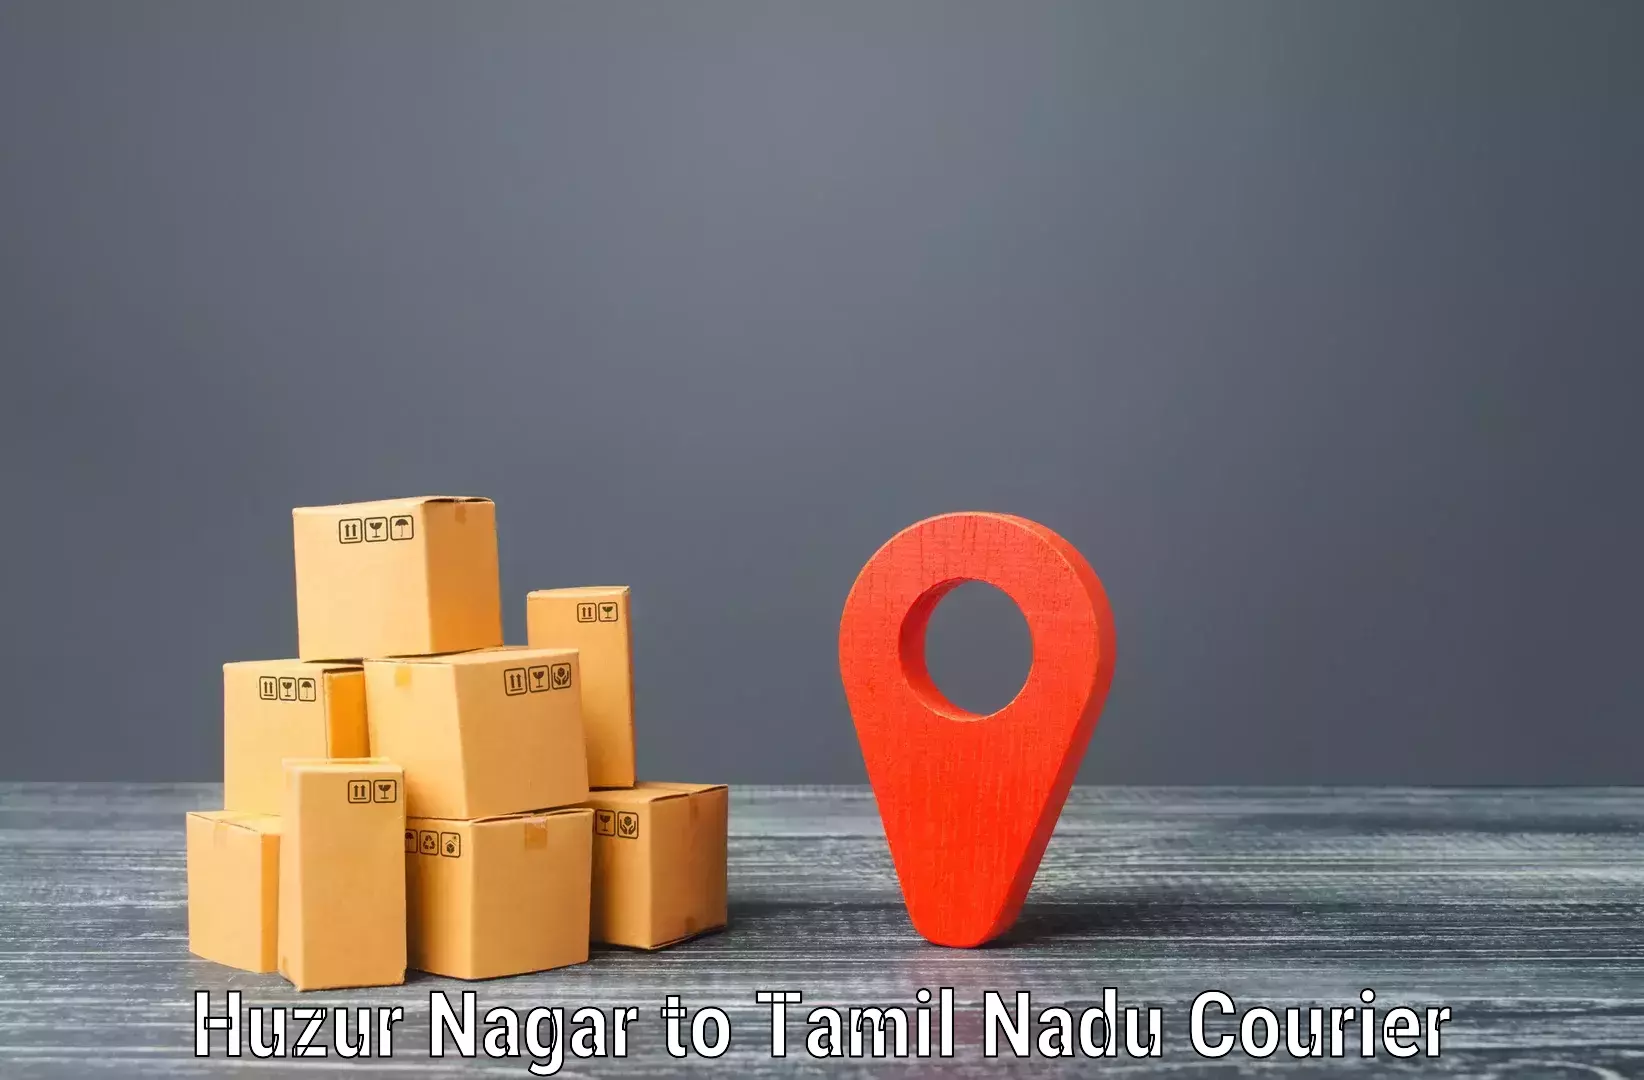 Easy return solutions Huzur Nagar to Nagercoil